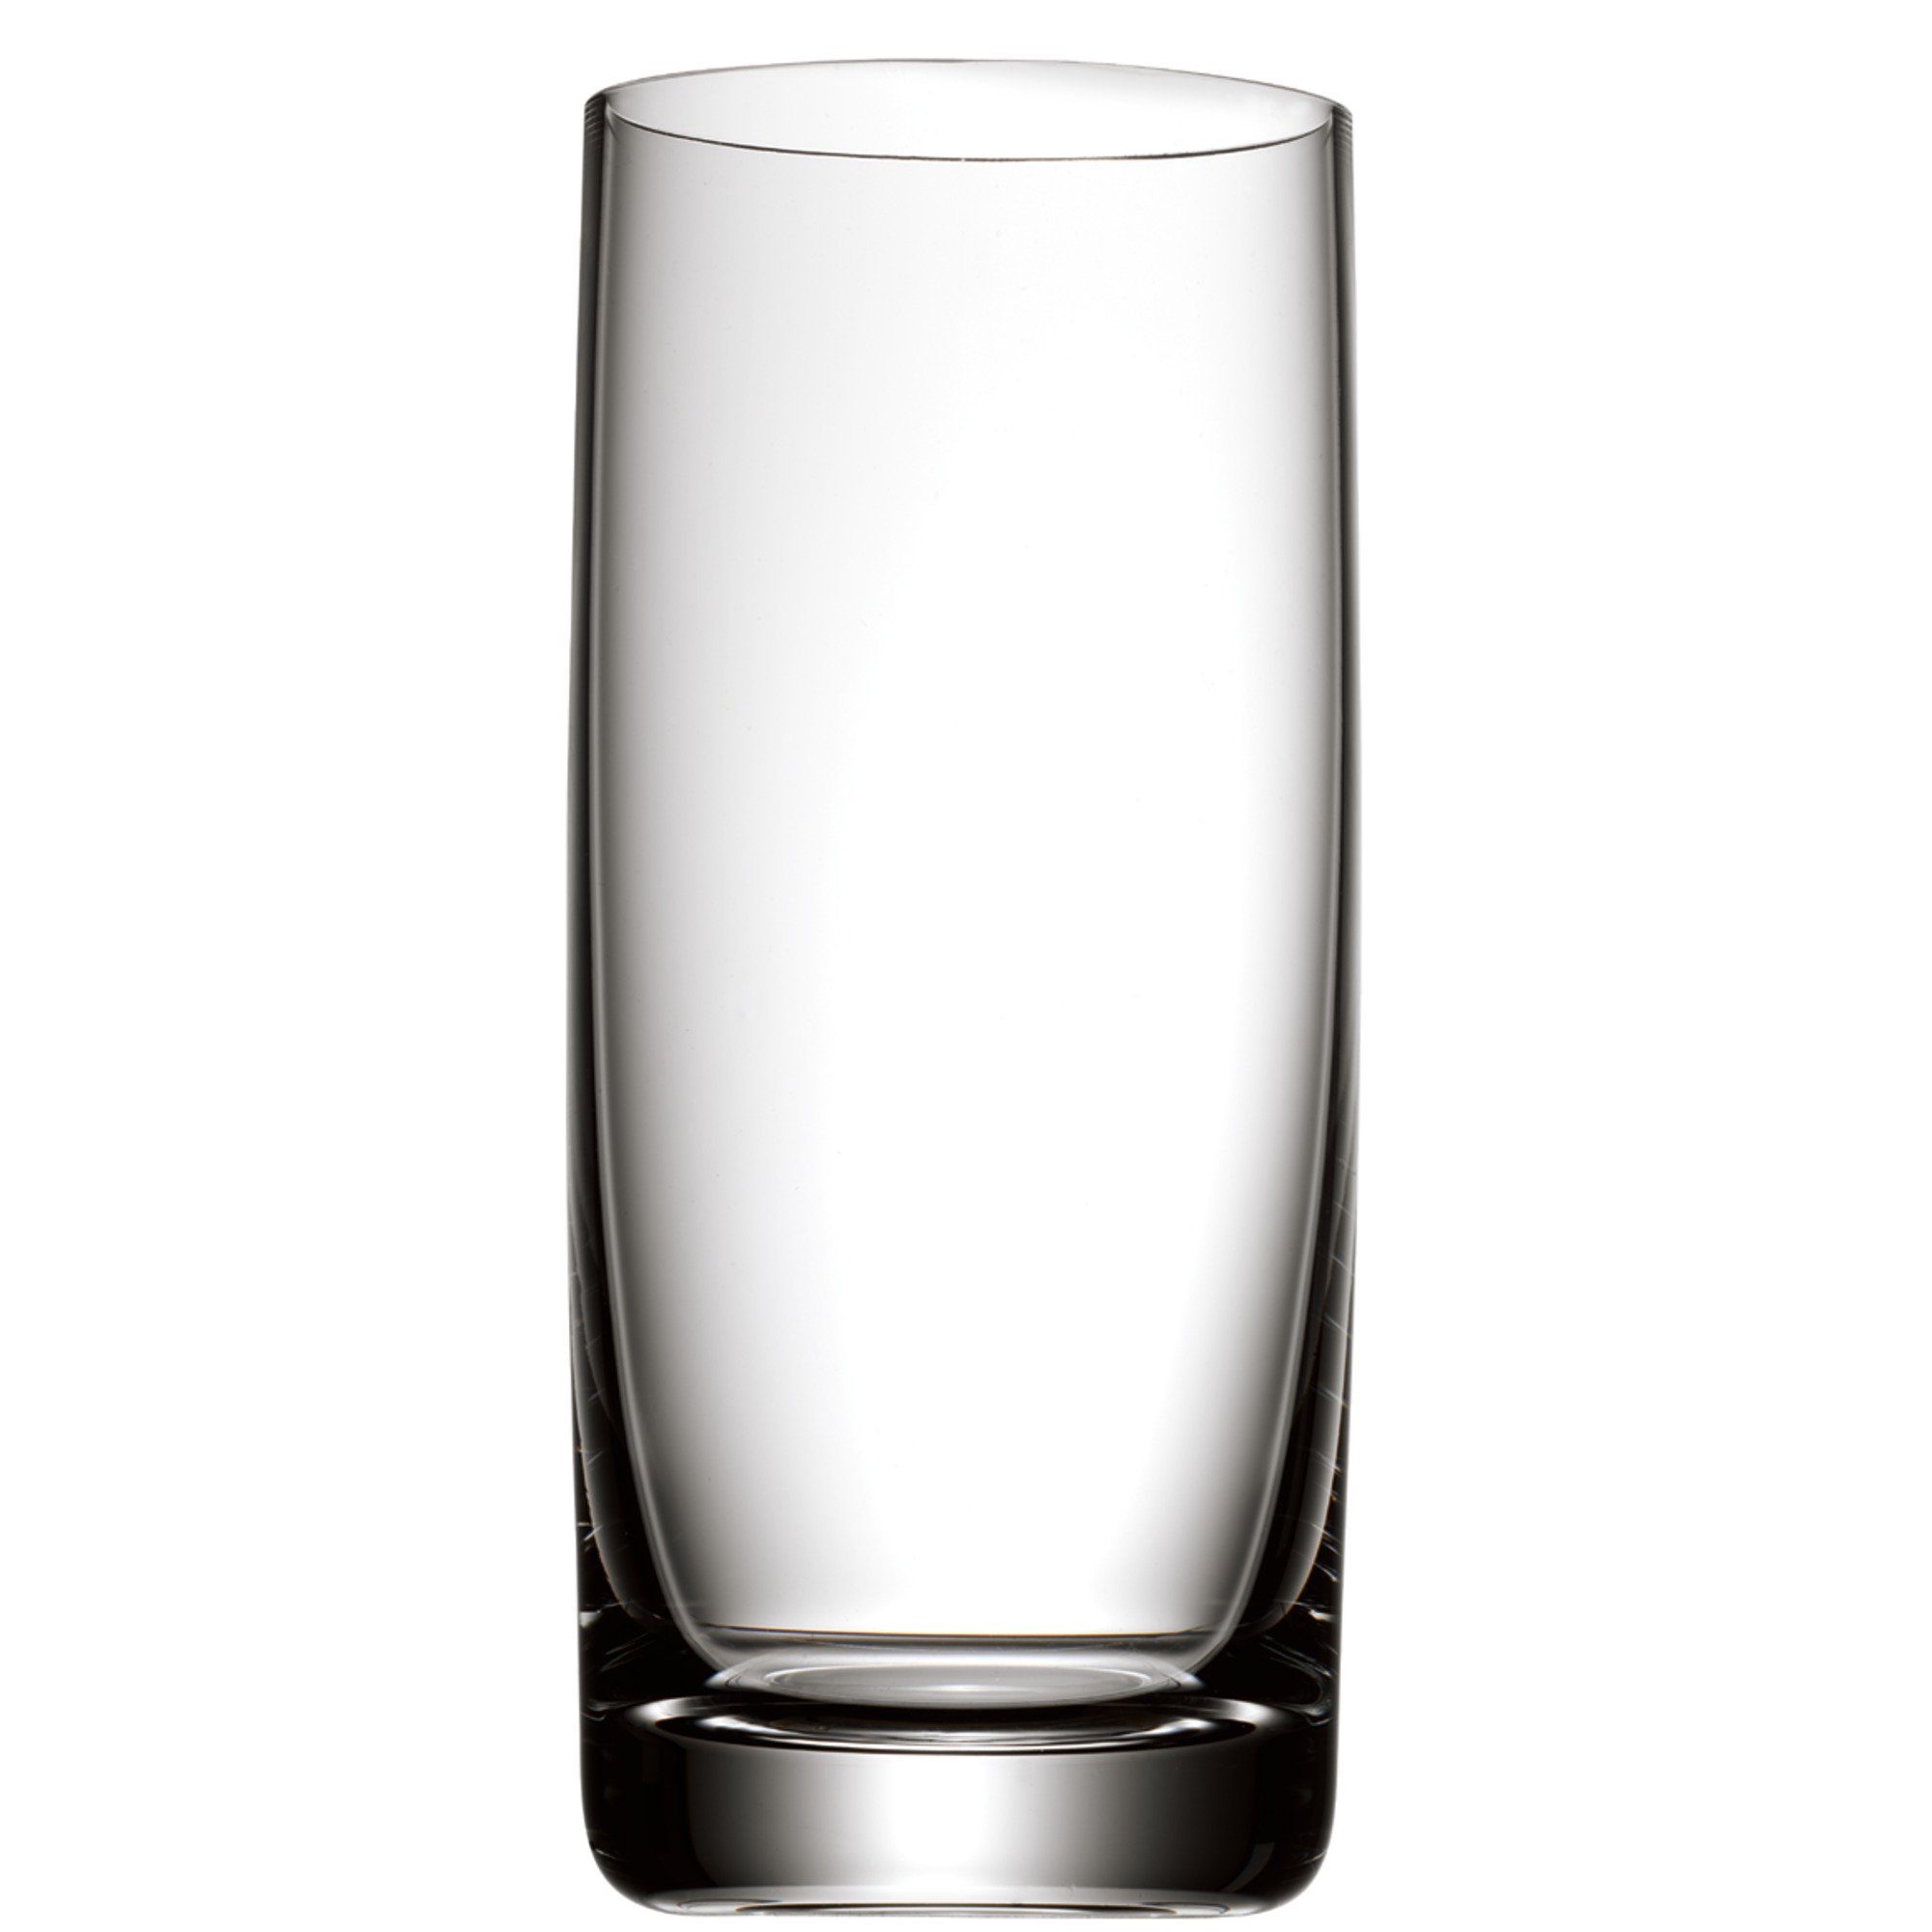 WMF Longdrinkglas Easy Plus, Kristallglas, 6-teilig, 350ml, spülmaschinengeeignet, bruchsicher